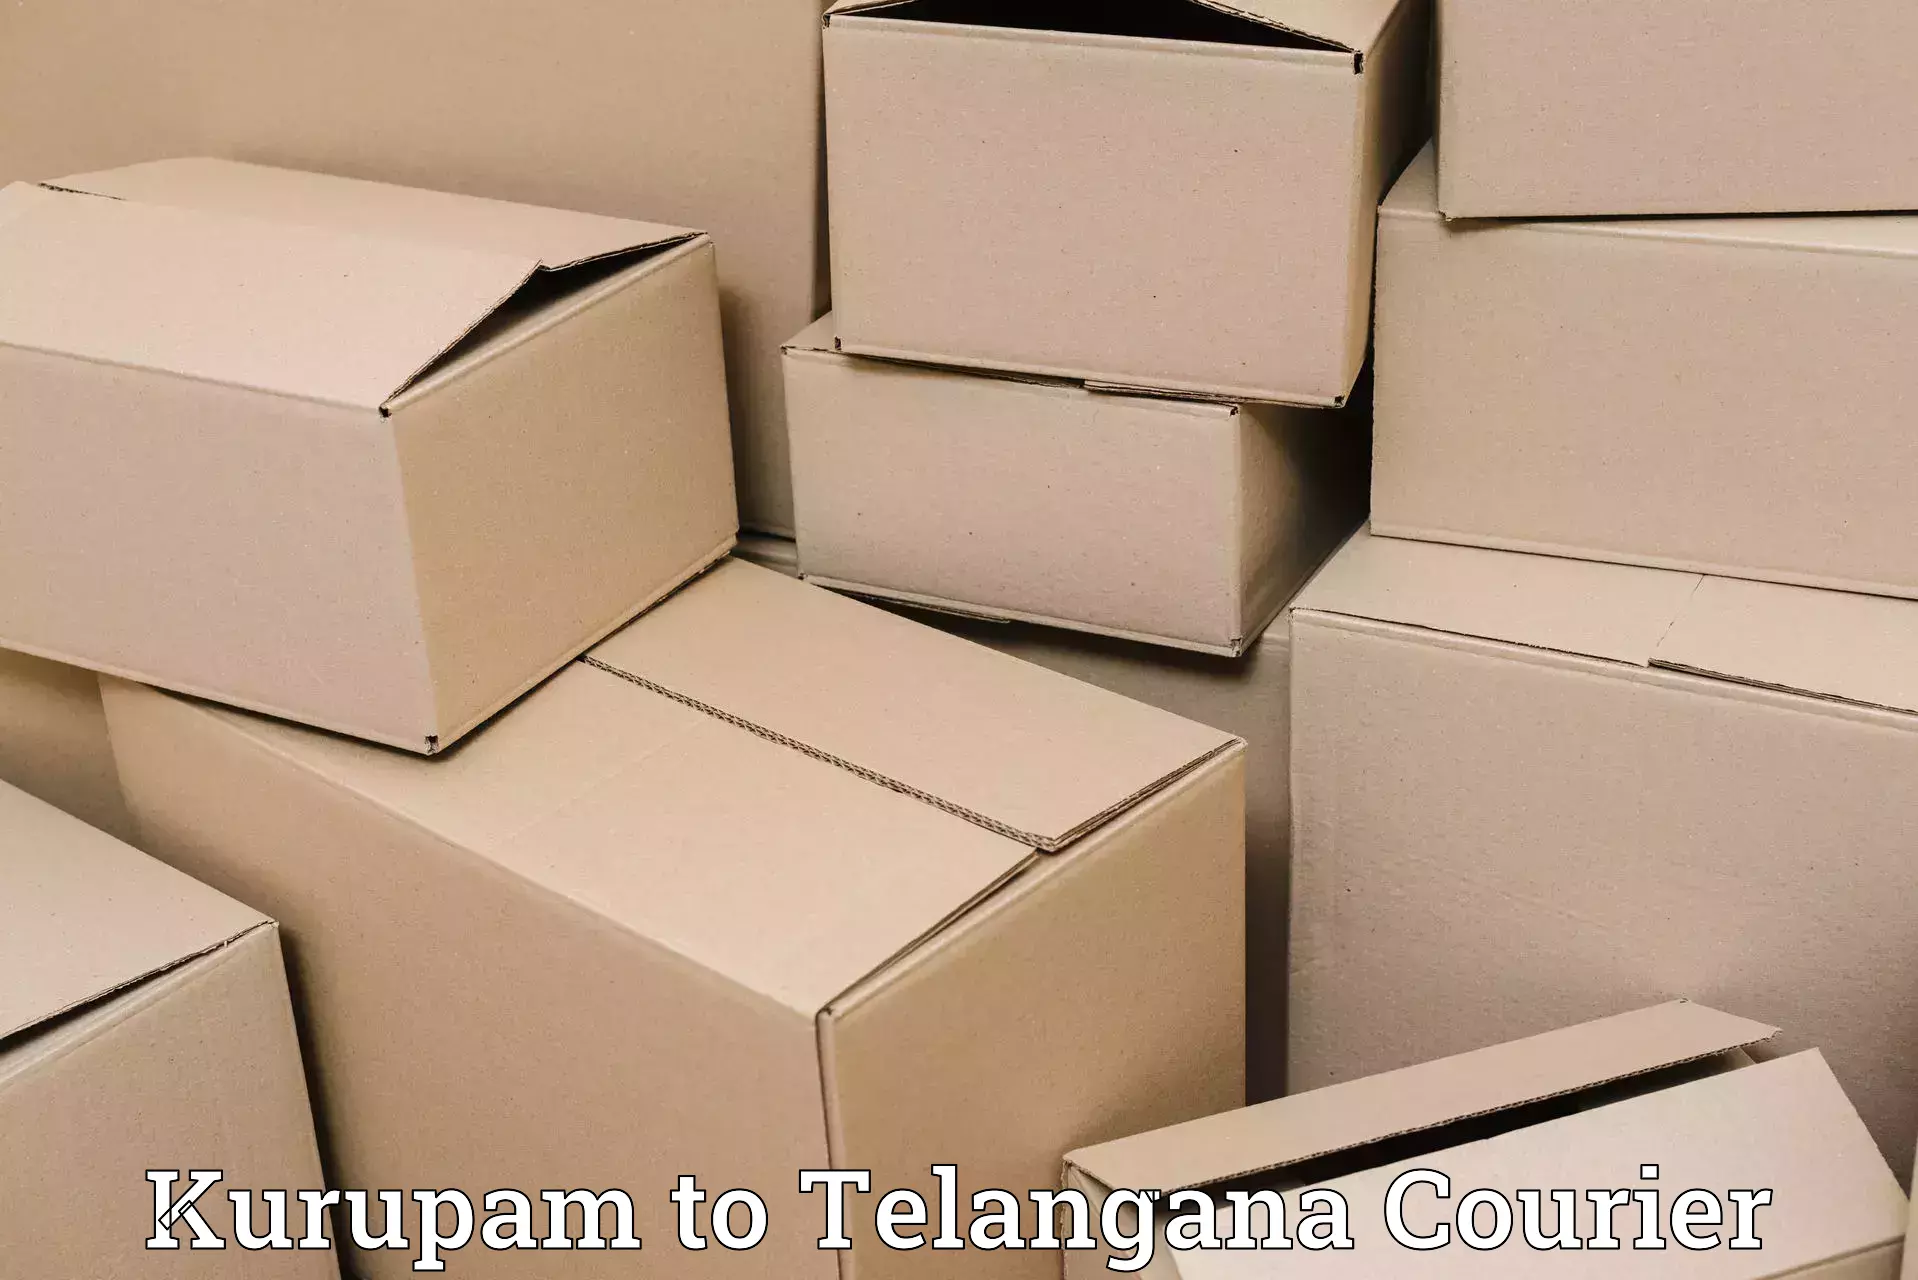 Sustainable courier practices Kurupam to Adilabad